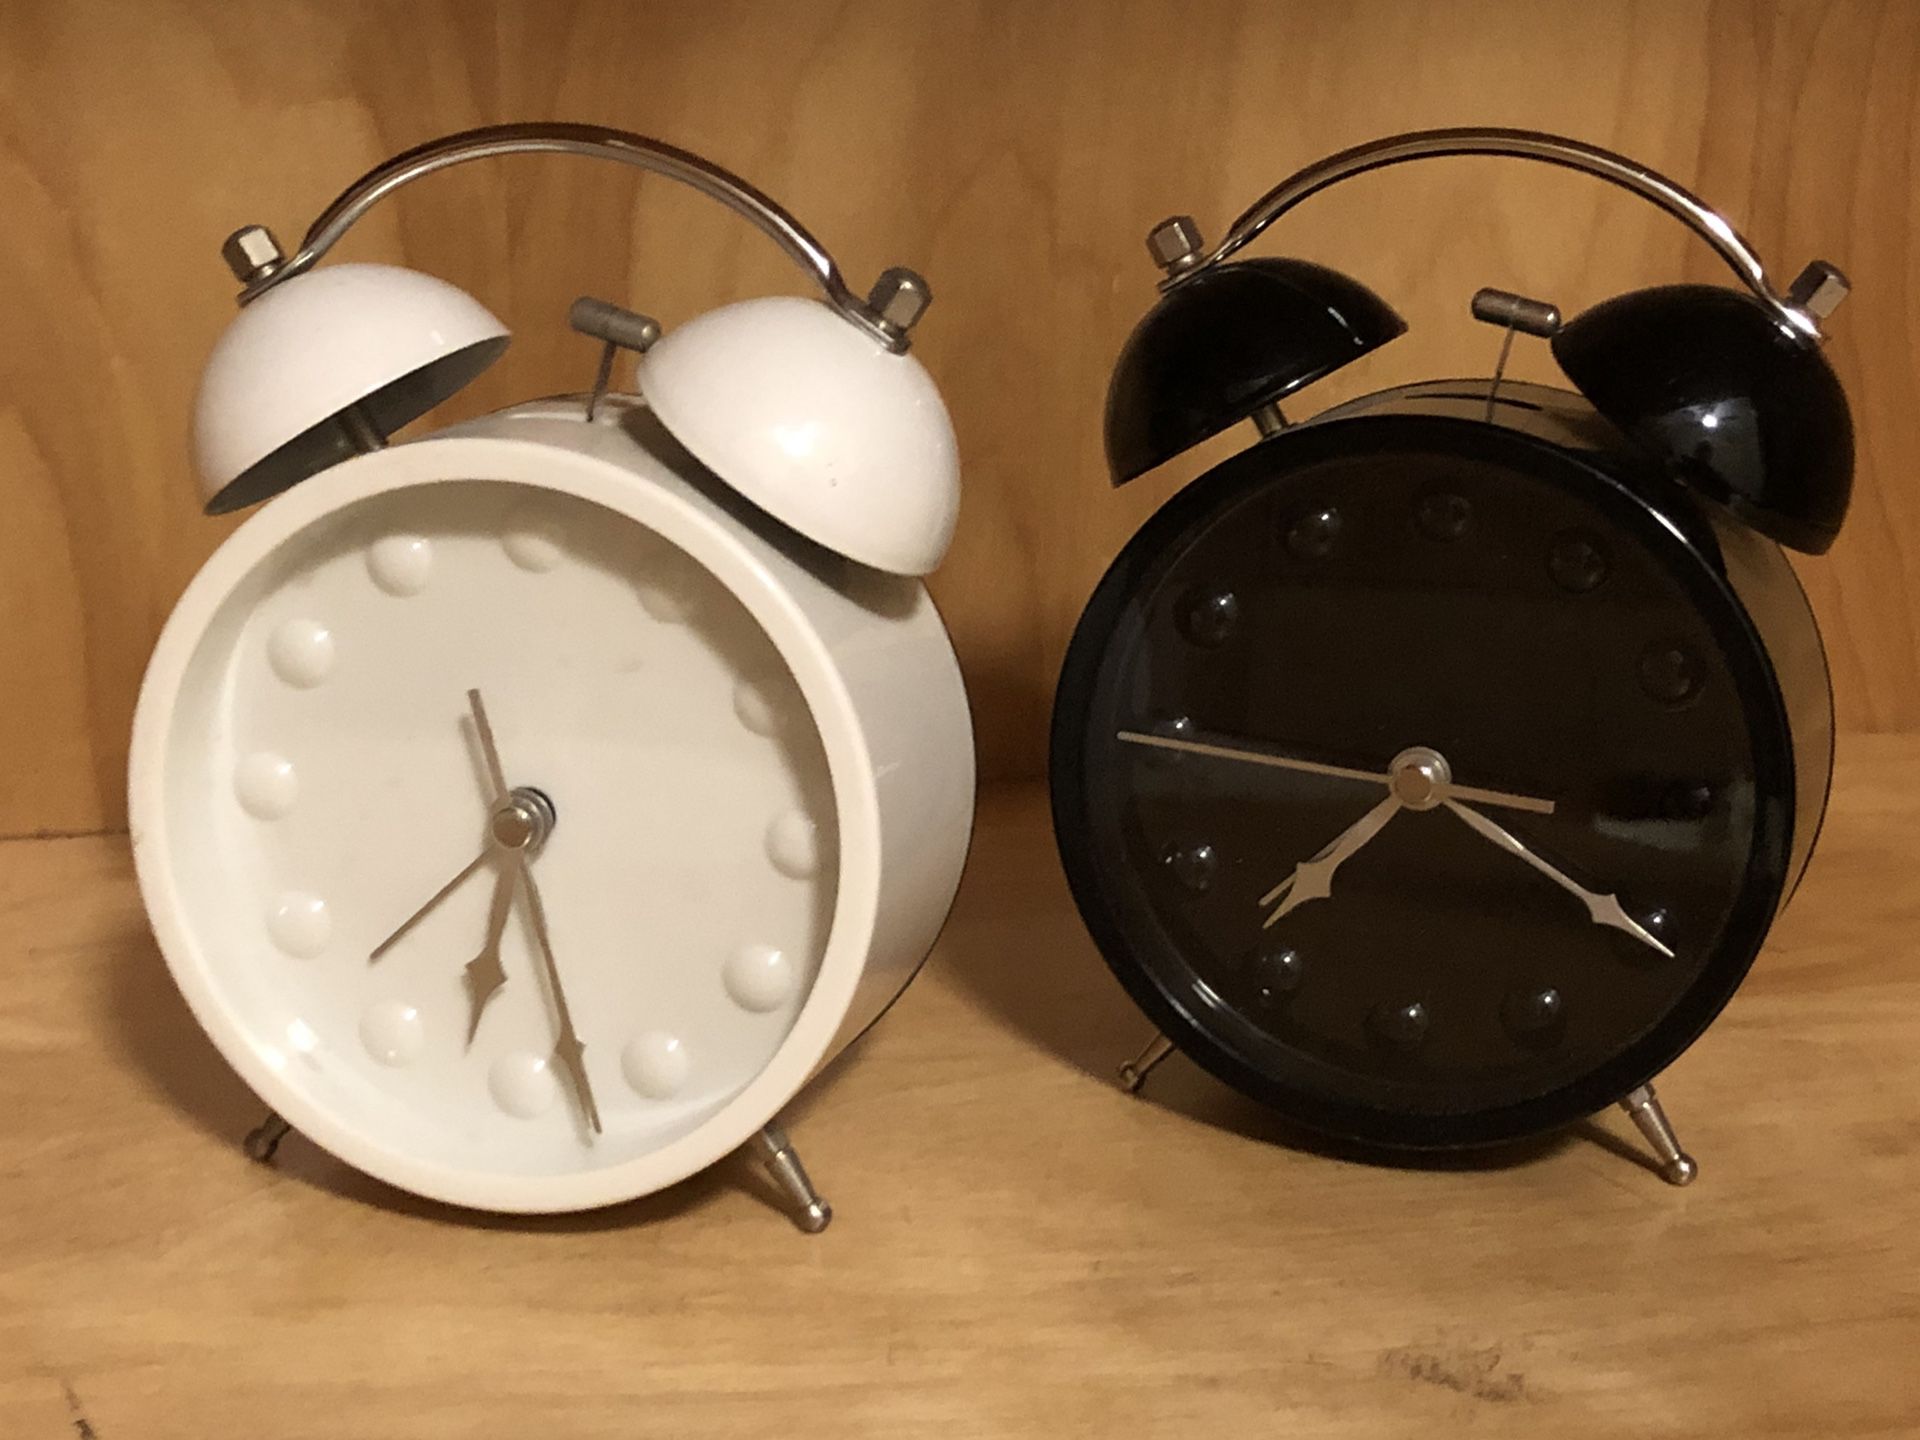 Two old fashioned Alarm Clocks